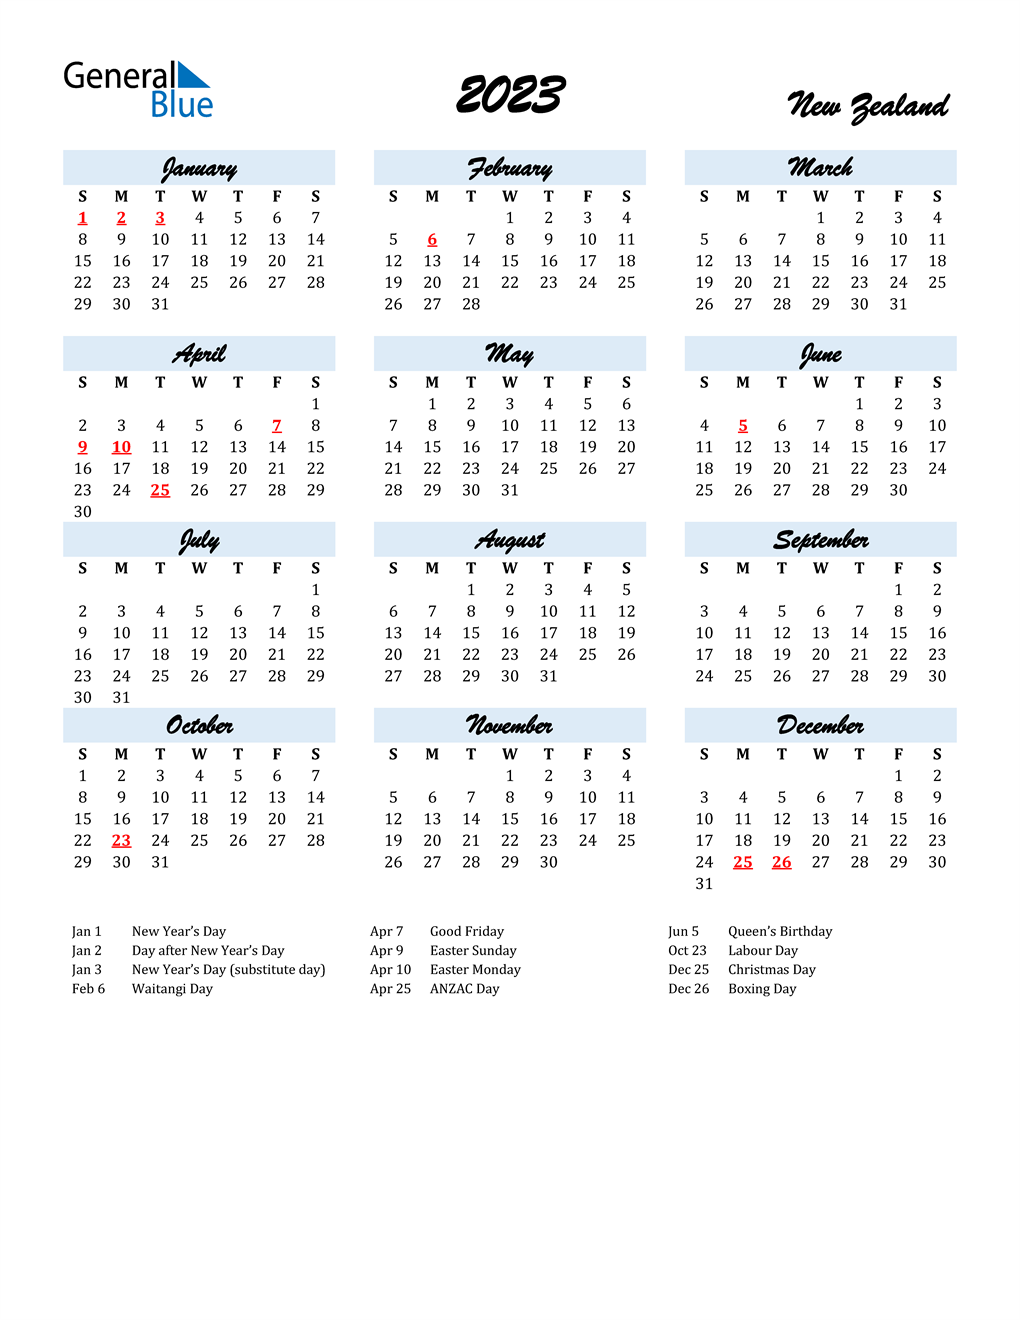 2023 New Zealand Calendar With Holidays 2023 New Zealand Calendar With Holidays Thaddeus Tanner 7287